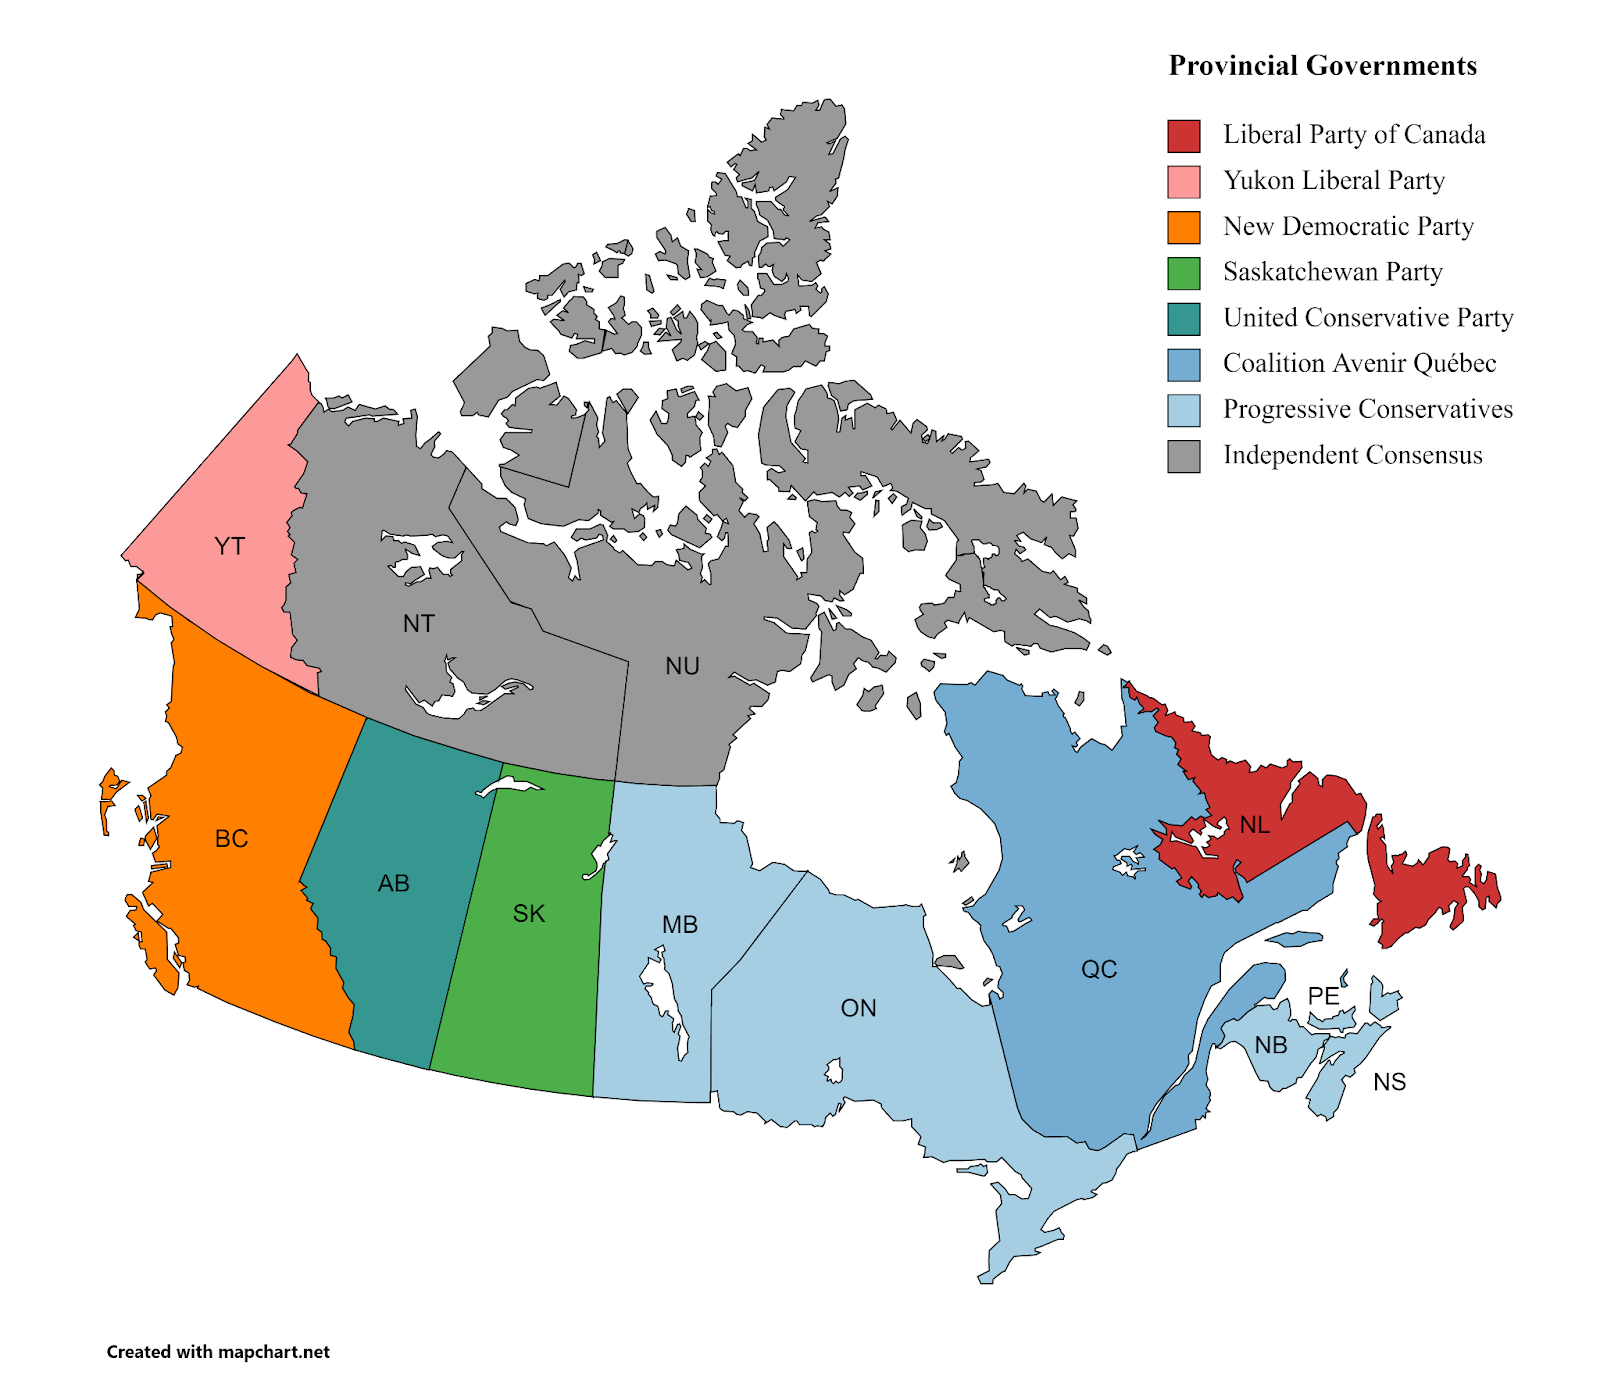 احزاب سیاسی کانادا در هر منطقه | سوگیموتو ویزا